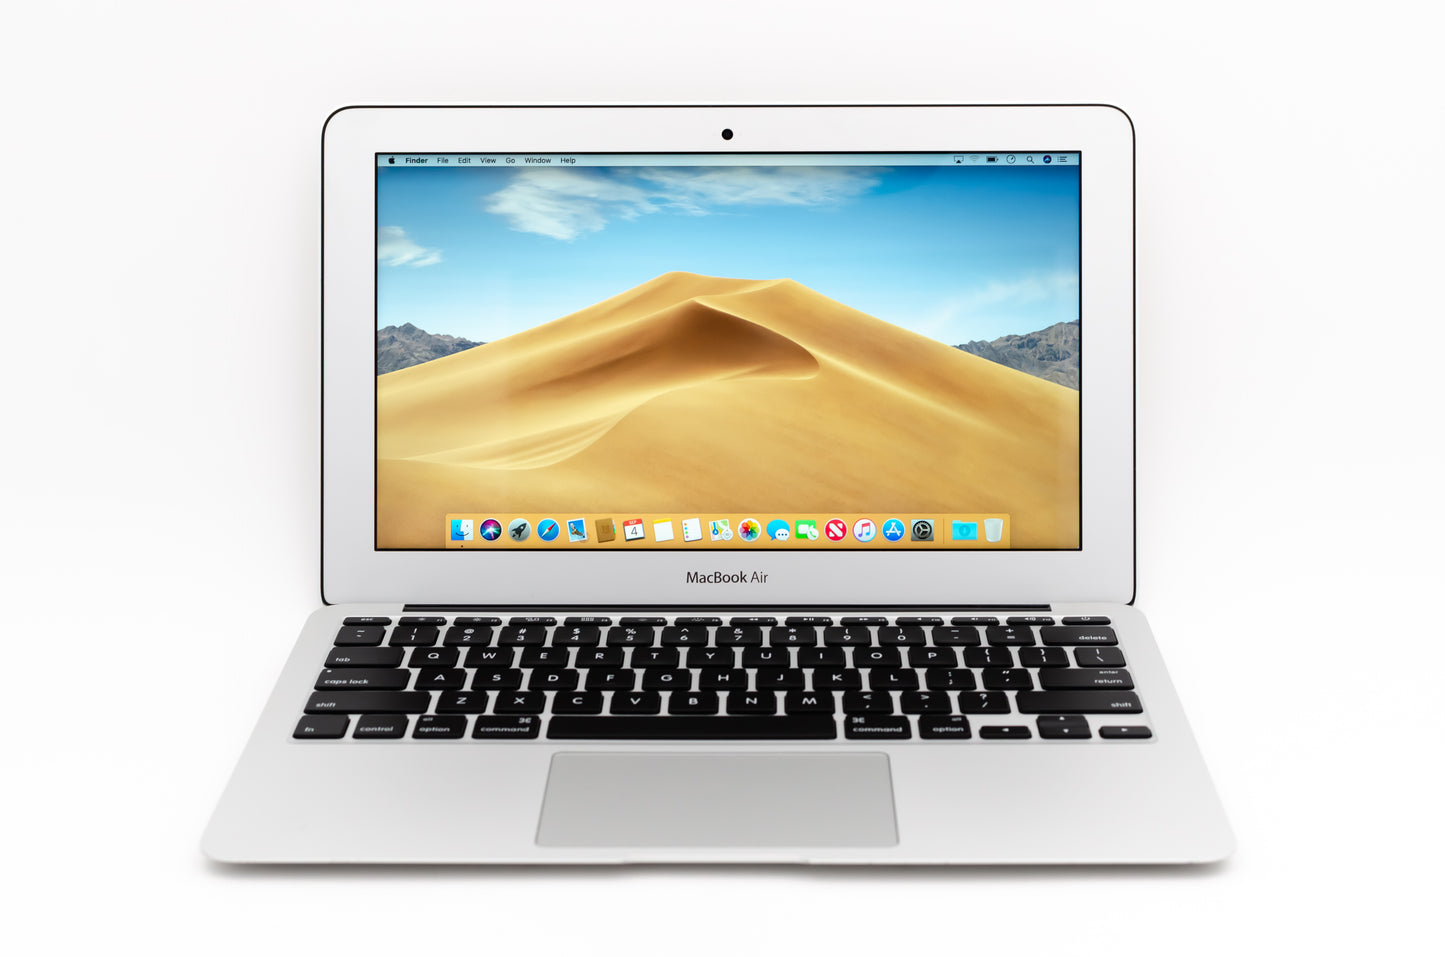 apple-mid-2013-11.6-inch-macbook-air-a1465-aluminum-dci7 - 1.7ghz processor, 4gb ram, hd 5000 - 1.5gb gpu-md711ll/a-1